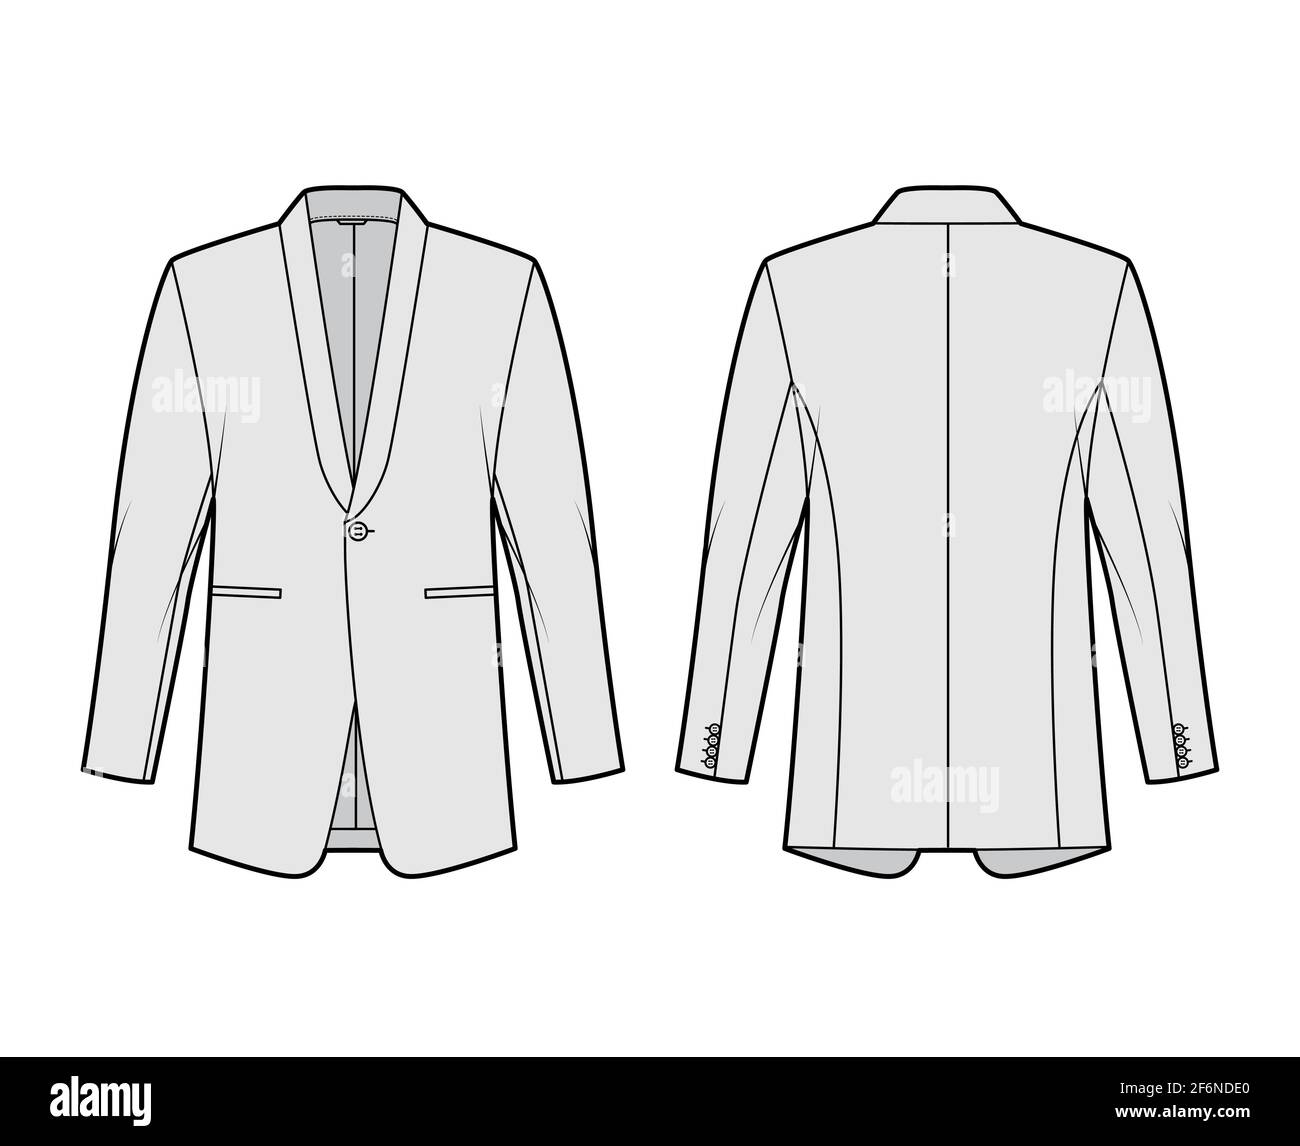 Dinner jacket tuxedo suit technical fashion illustration with long ...